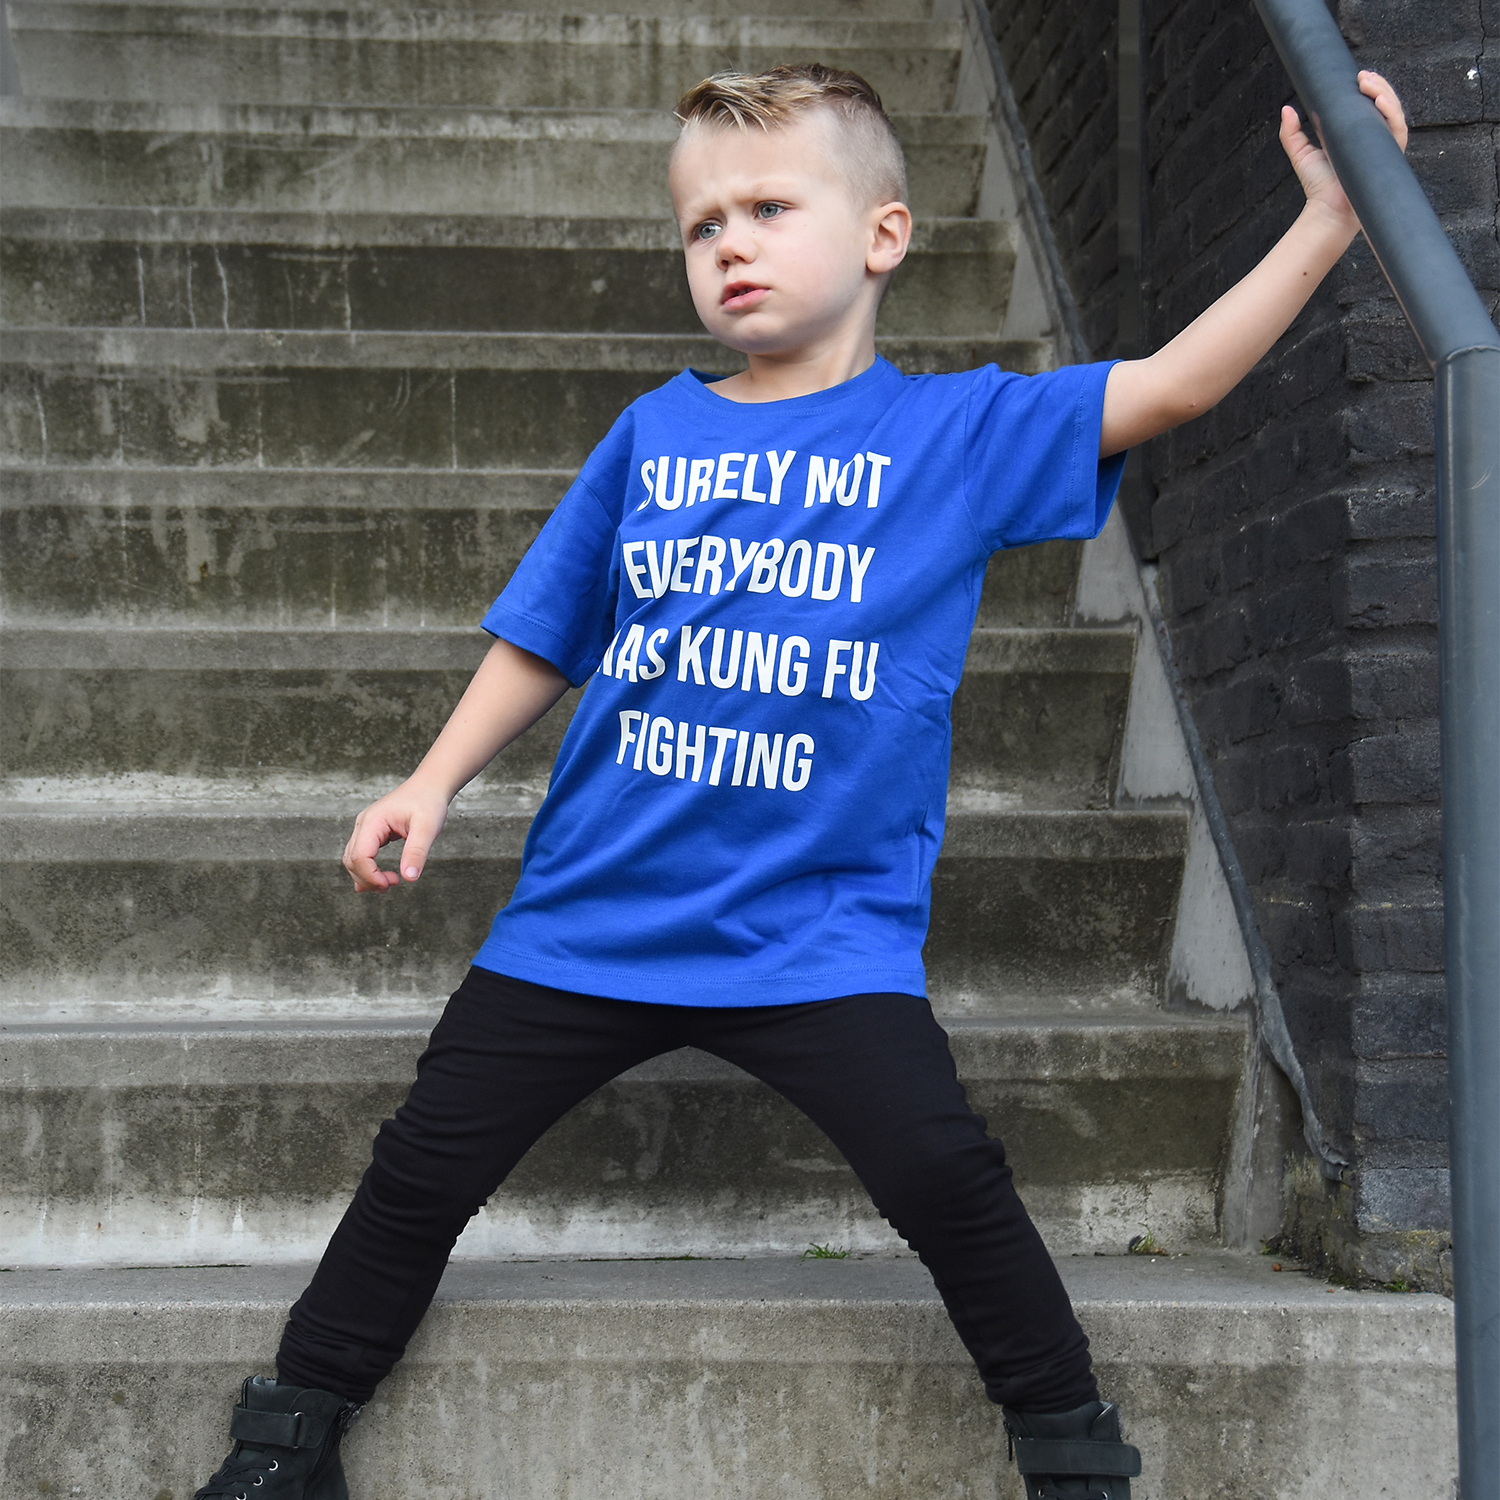 'Surely not everybody was kung fu fighting' kids shortsleeve shirt